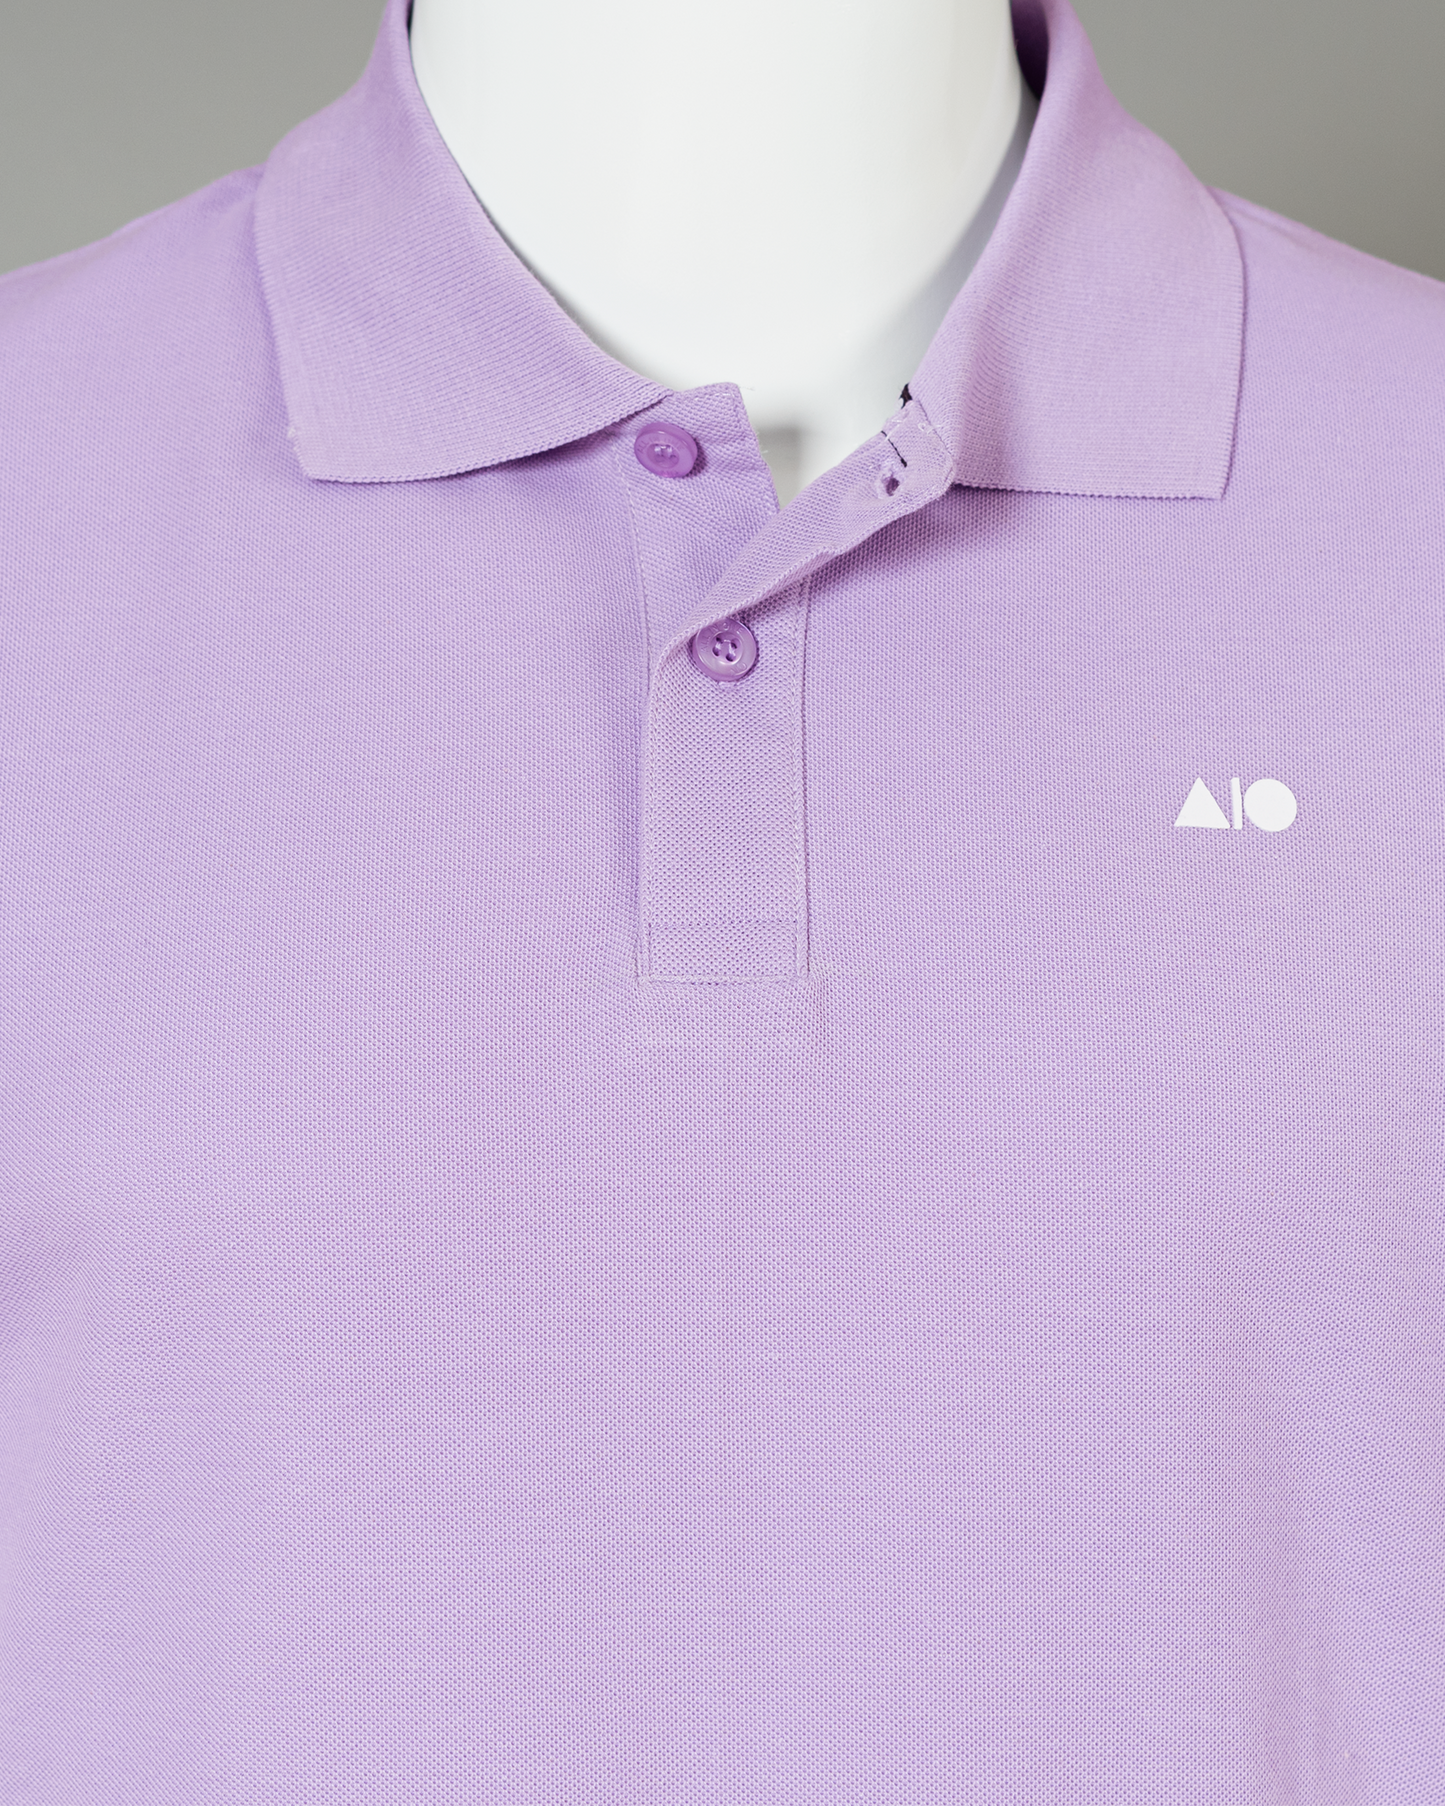 Mens Basic Polo Shirt - Combo (Purple Rose, Teal Blue & Green)